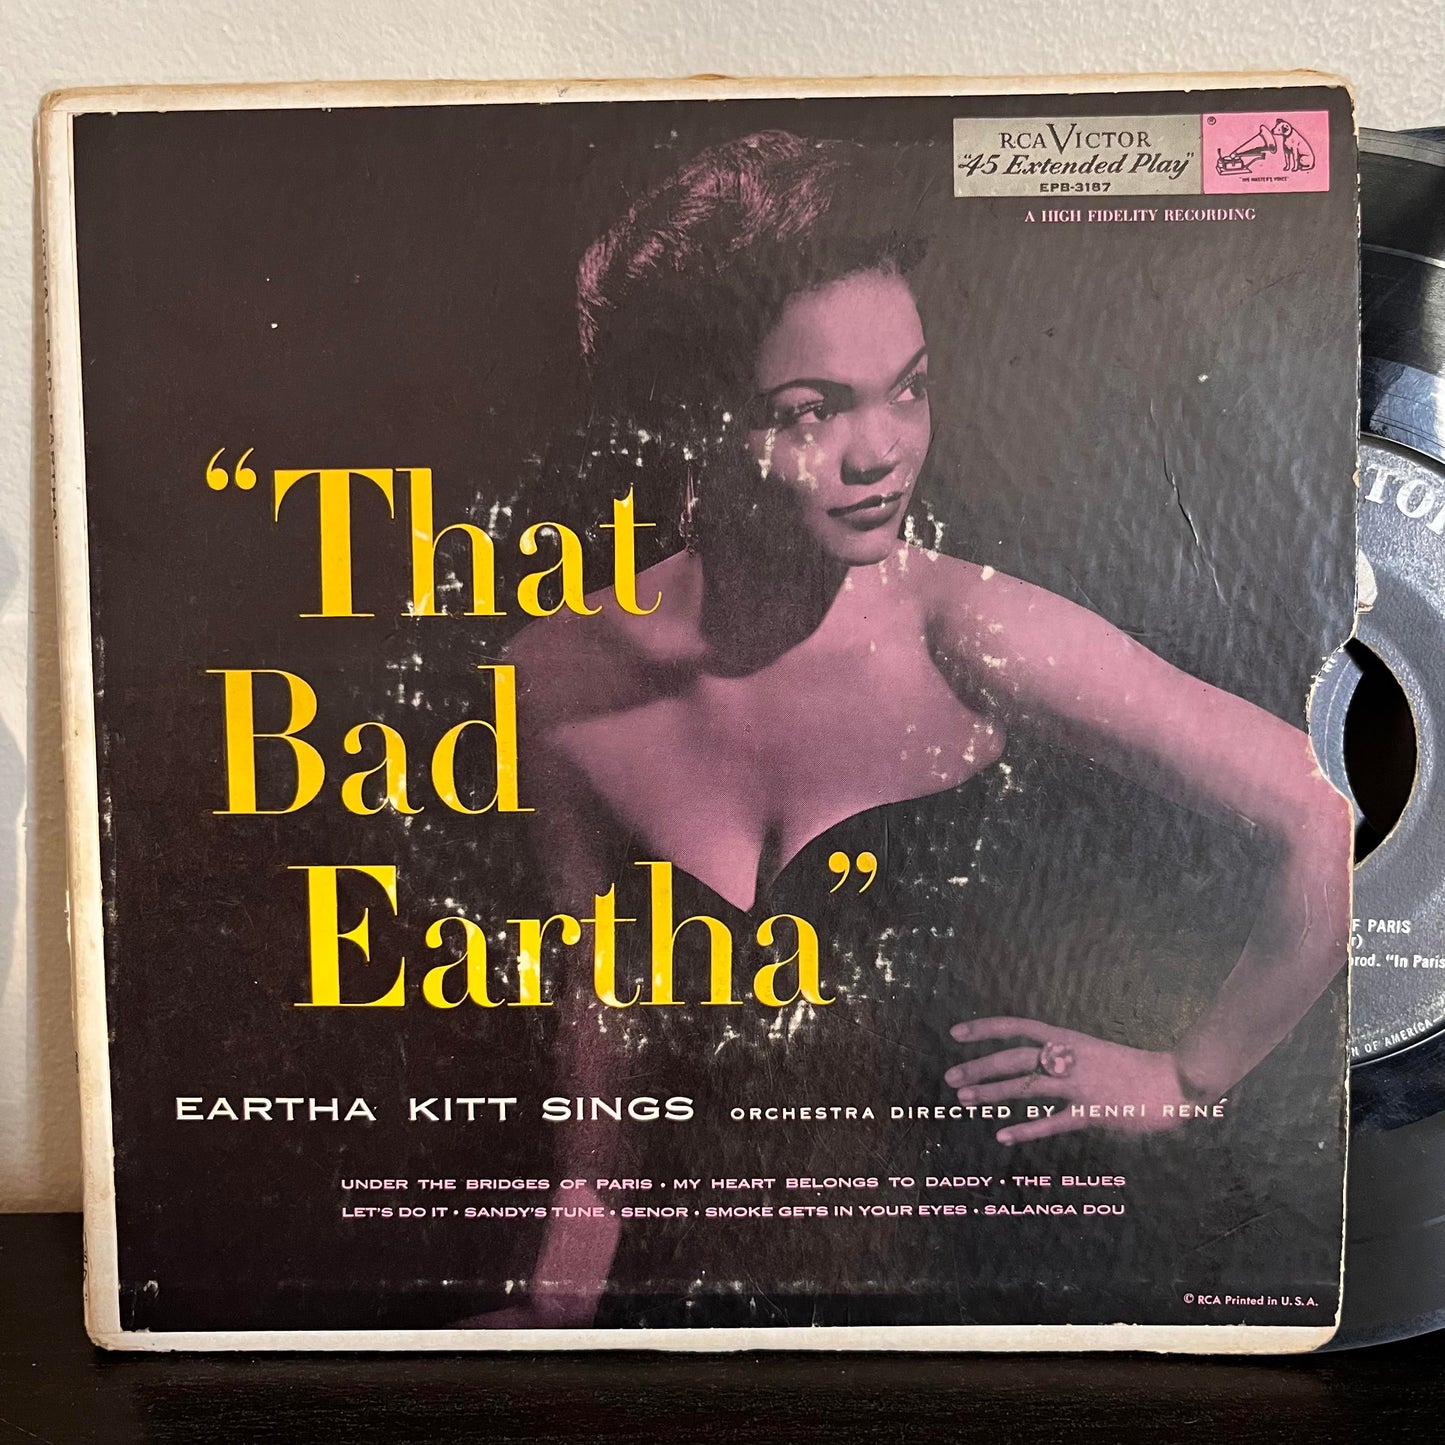 Eartha Kitt Sings "That Bad Eartha" RCA Victor 45 EP EPB-3187 VG+ Vinyl